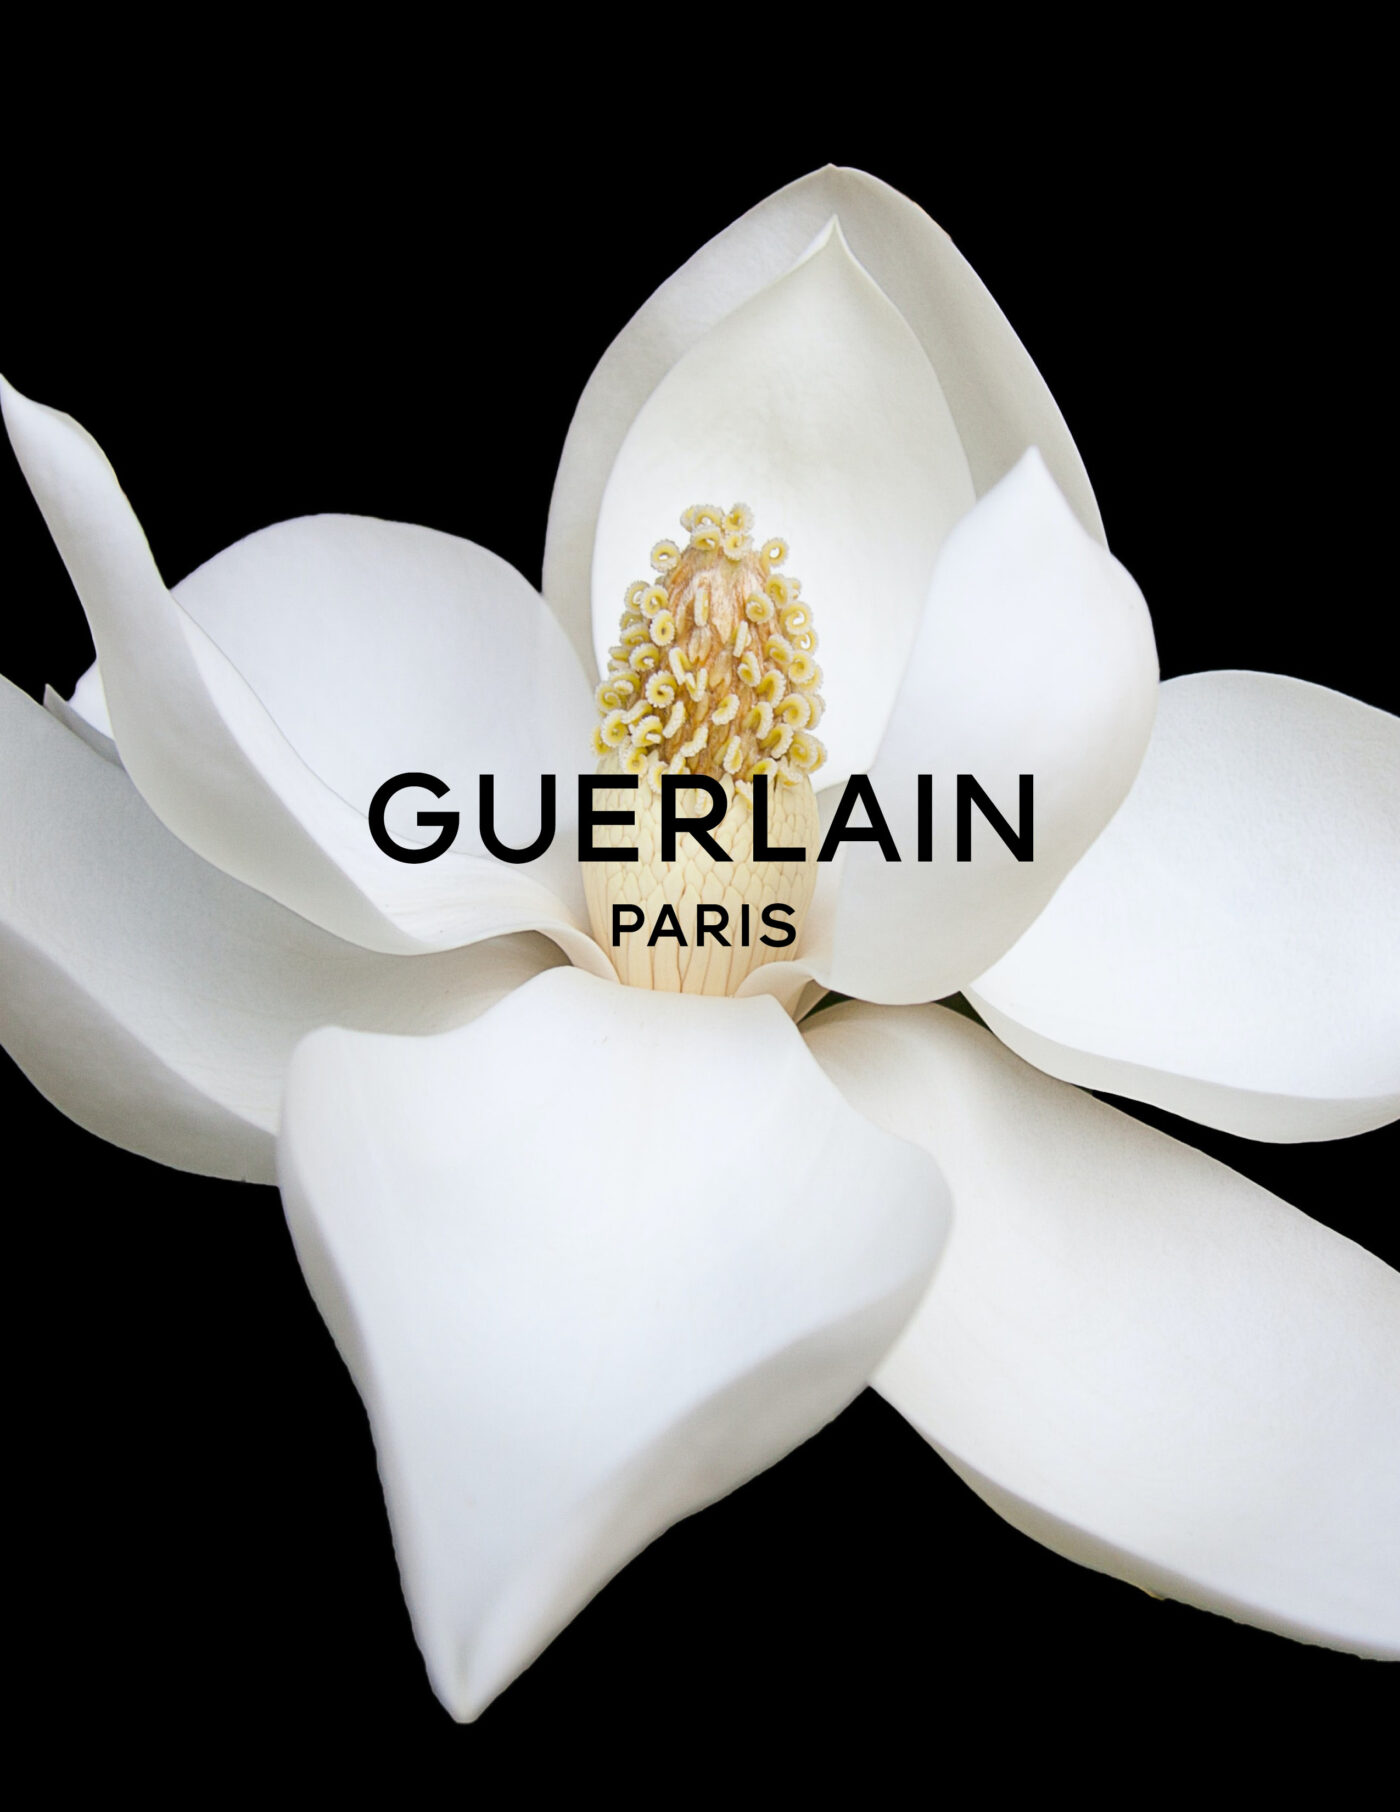 Guerlain – Creative direction and design